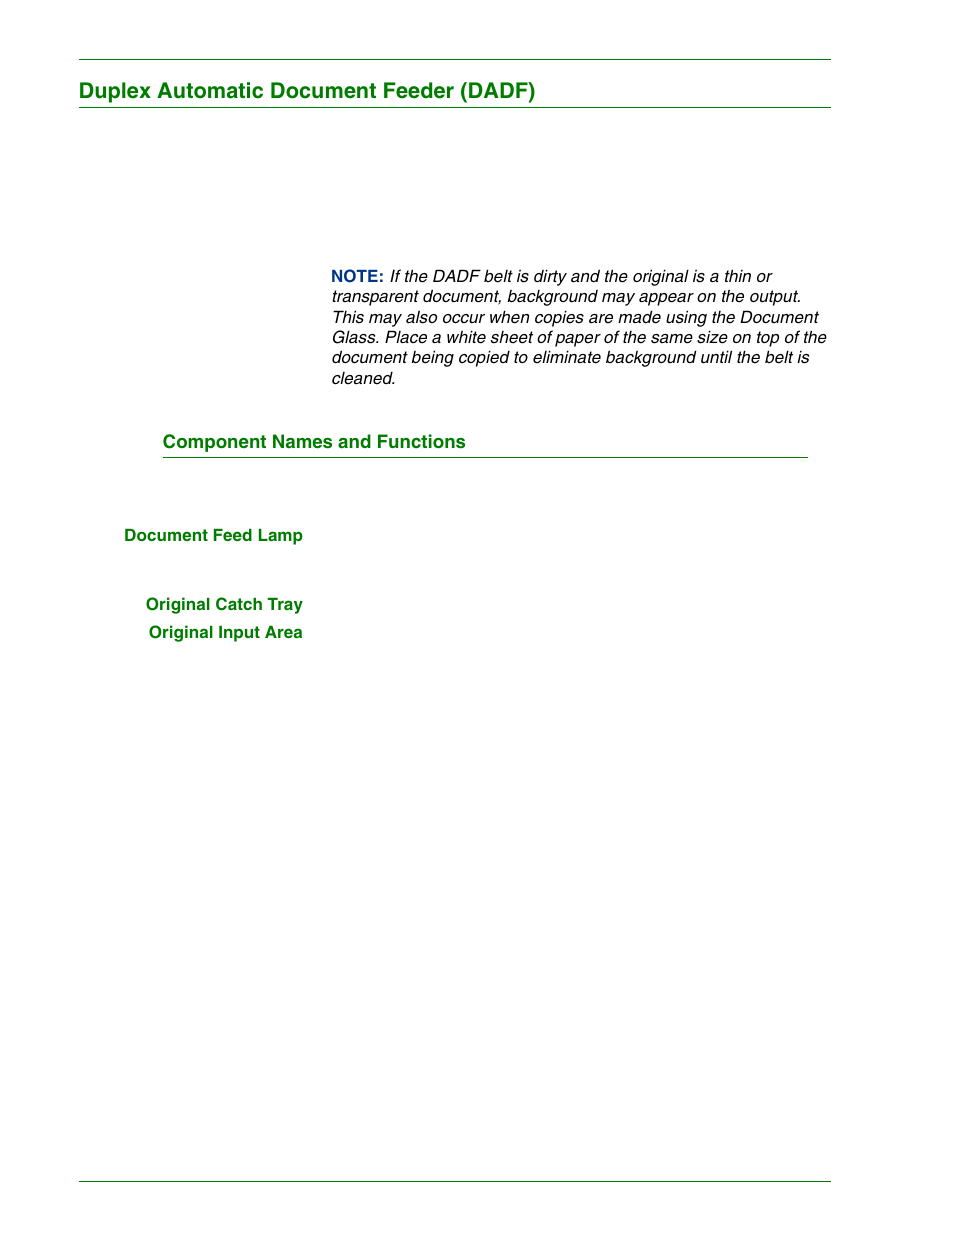 Duplex automatic document feeder (dadf), Component names and functions, Duplex automatic document feeder (dadf) 1–82 | Component names and functions 1–82 | HP 3535 User Manual | Page 100 / 268